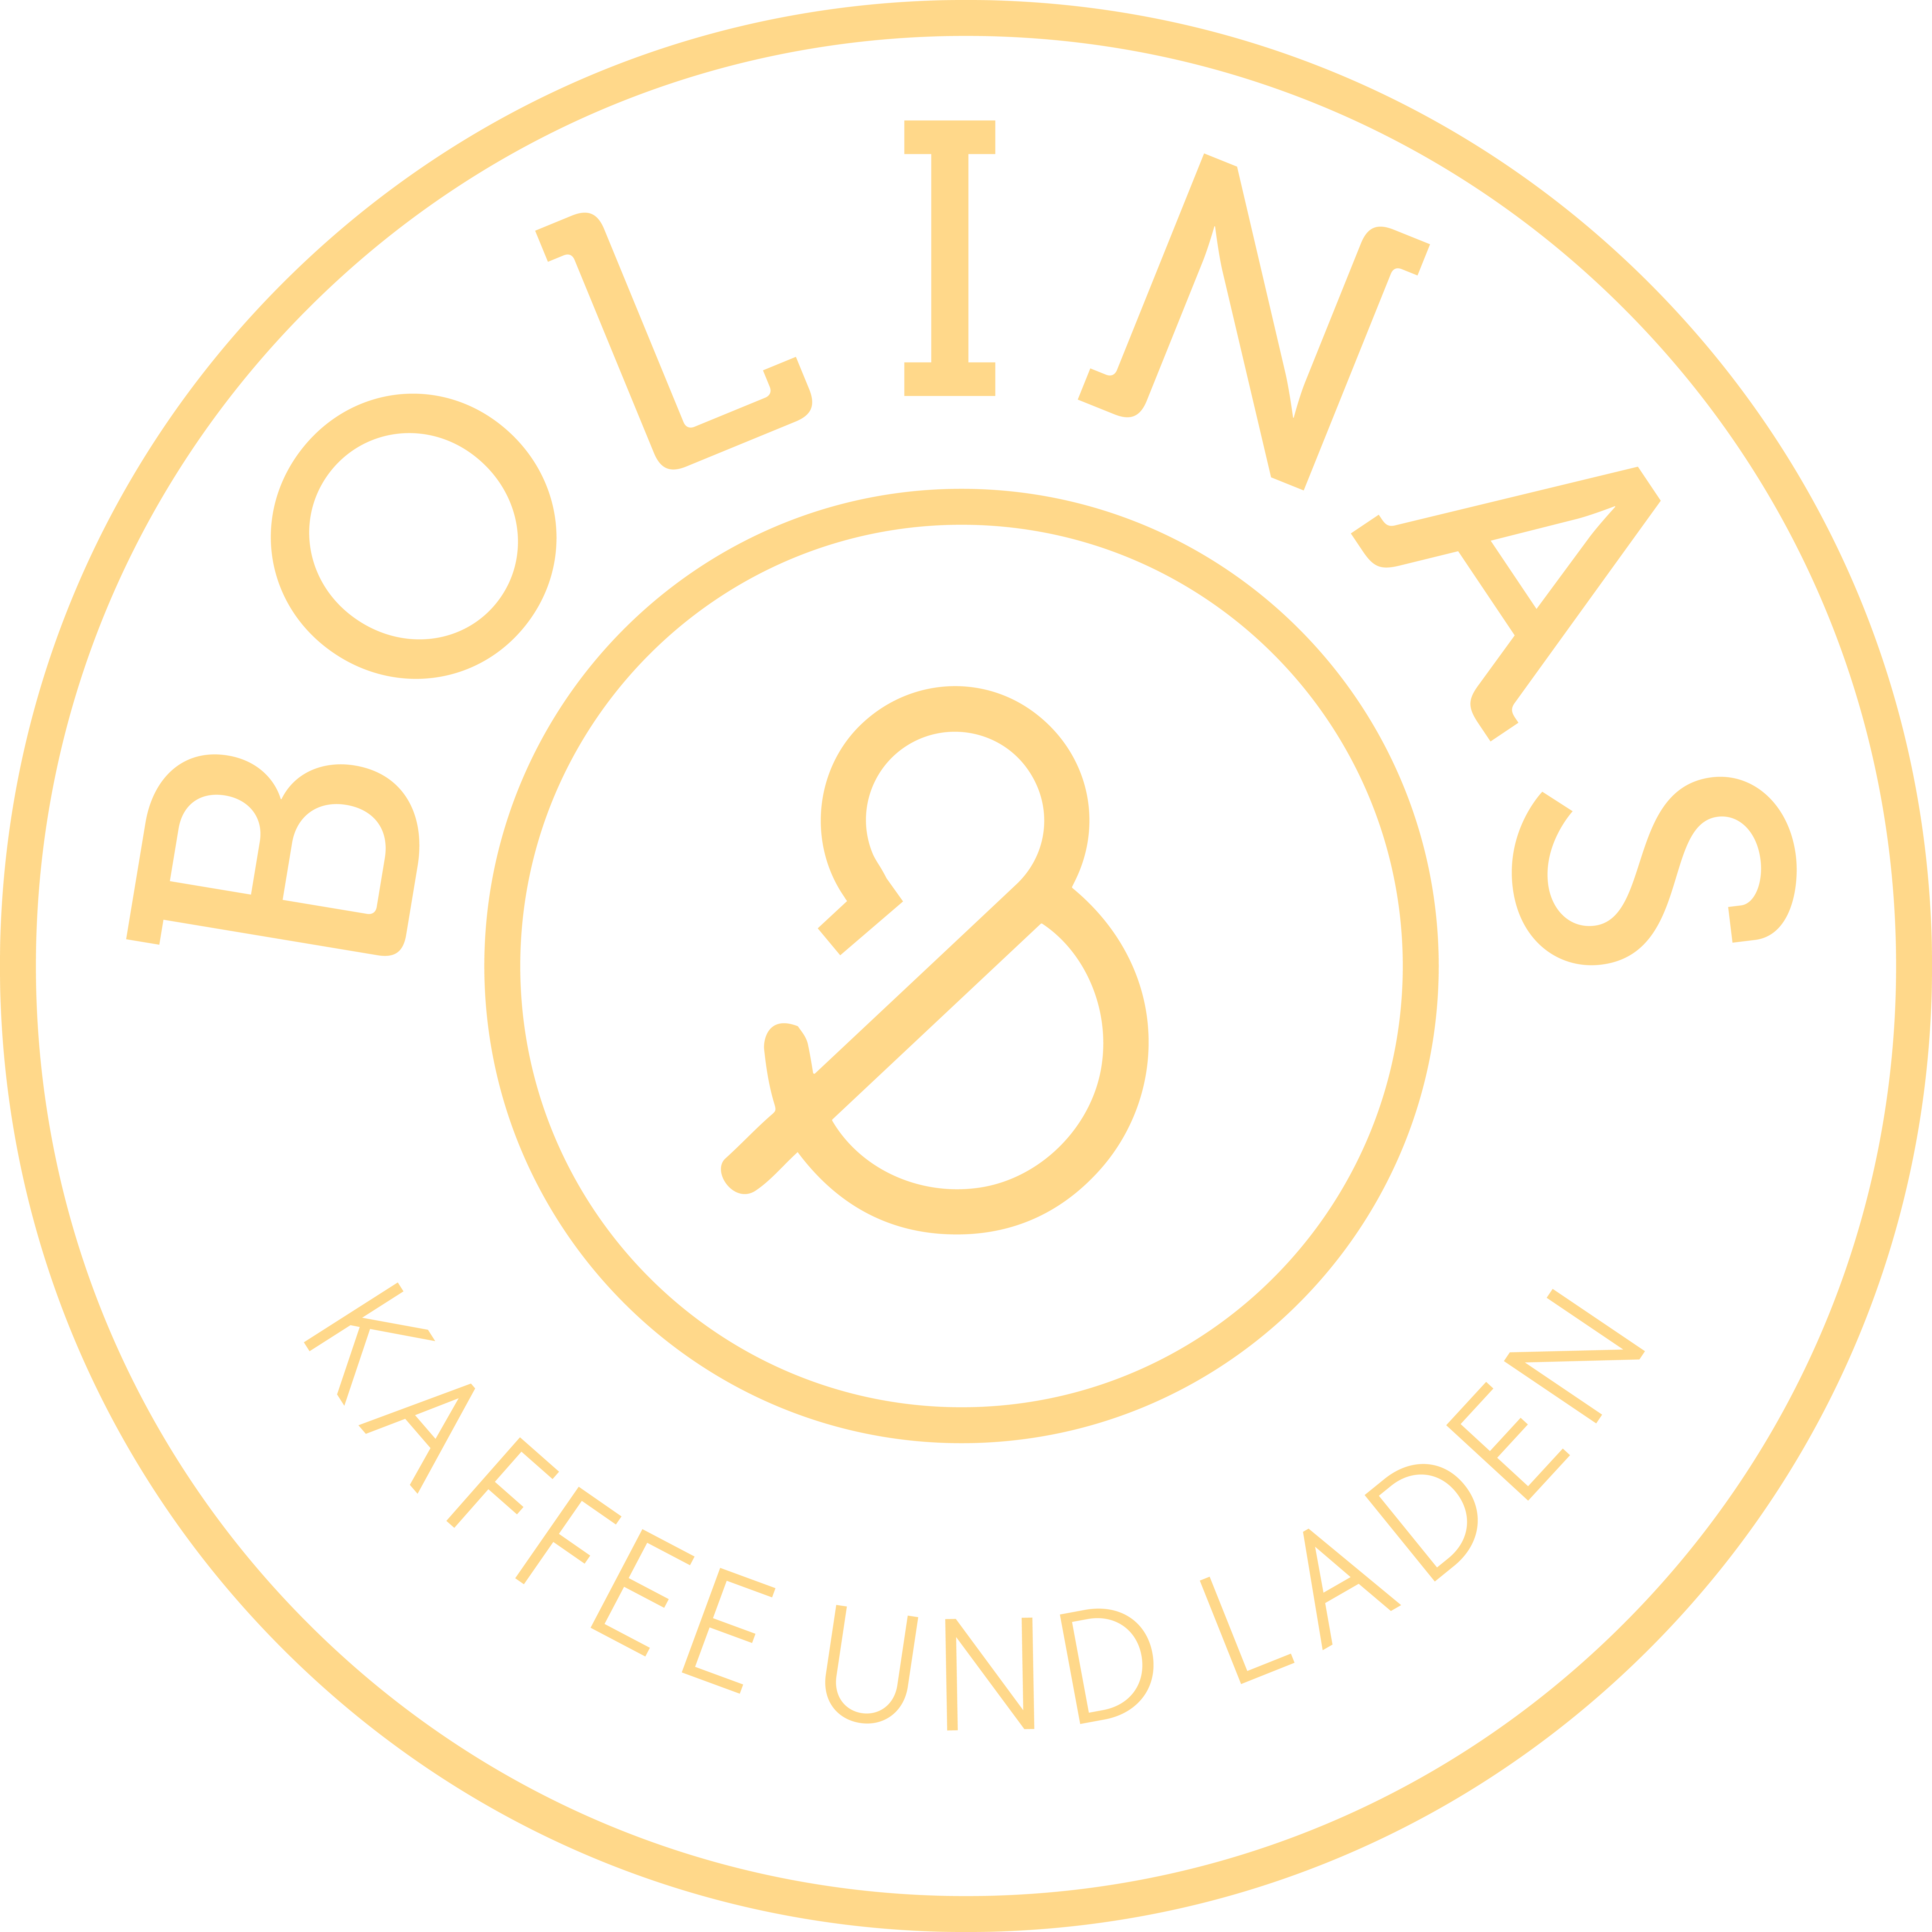 Bolinas Kaffee & Laden Round Logo Yellow